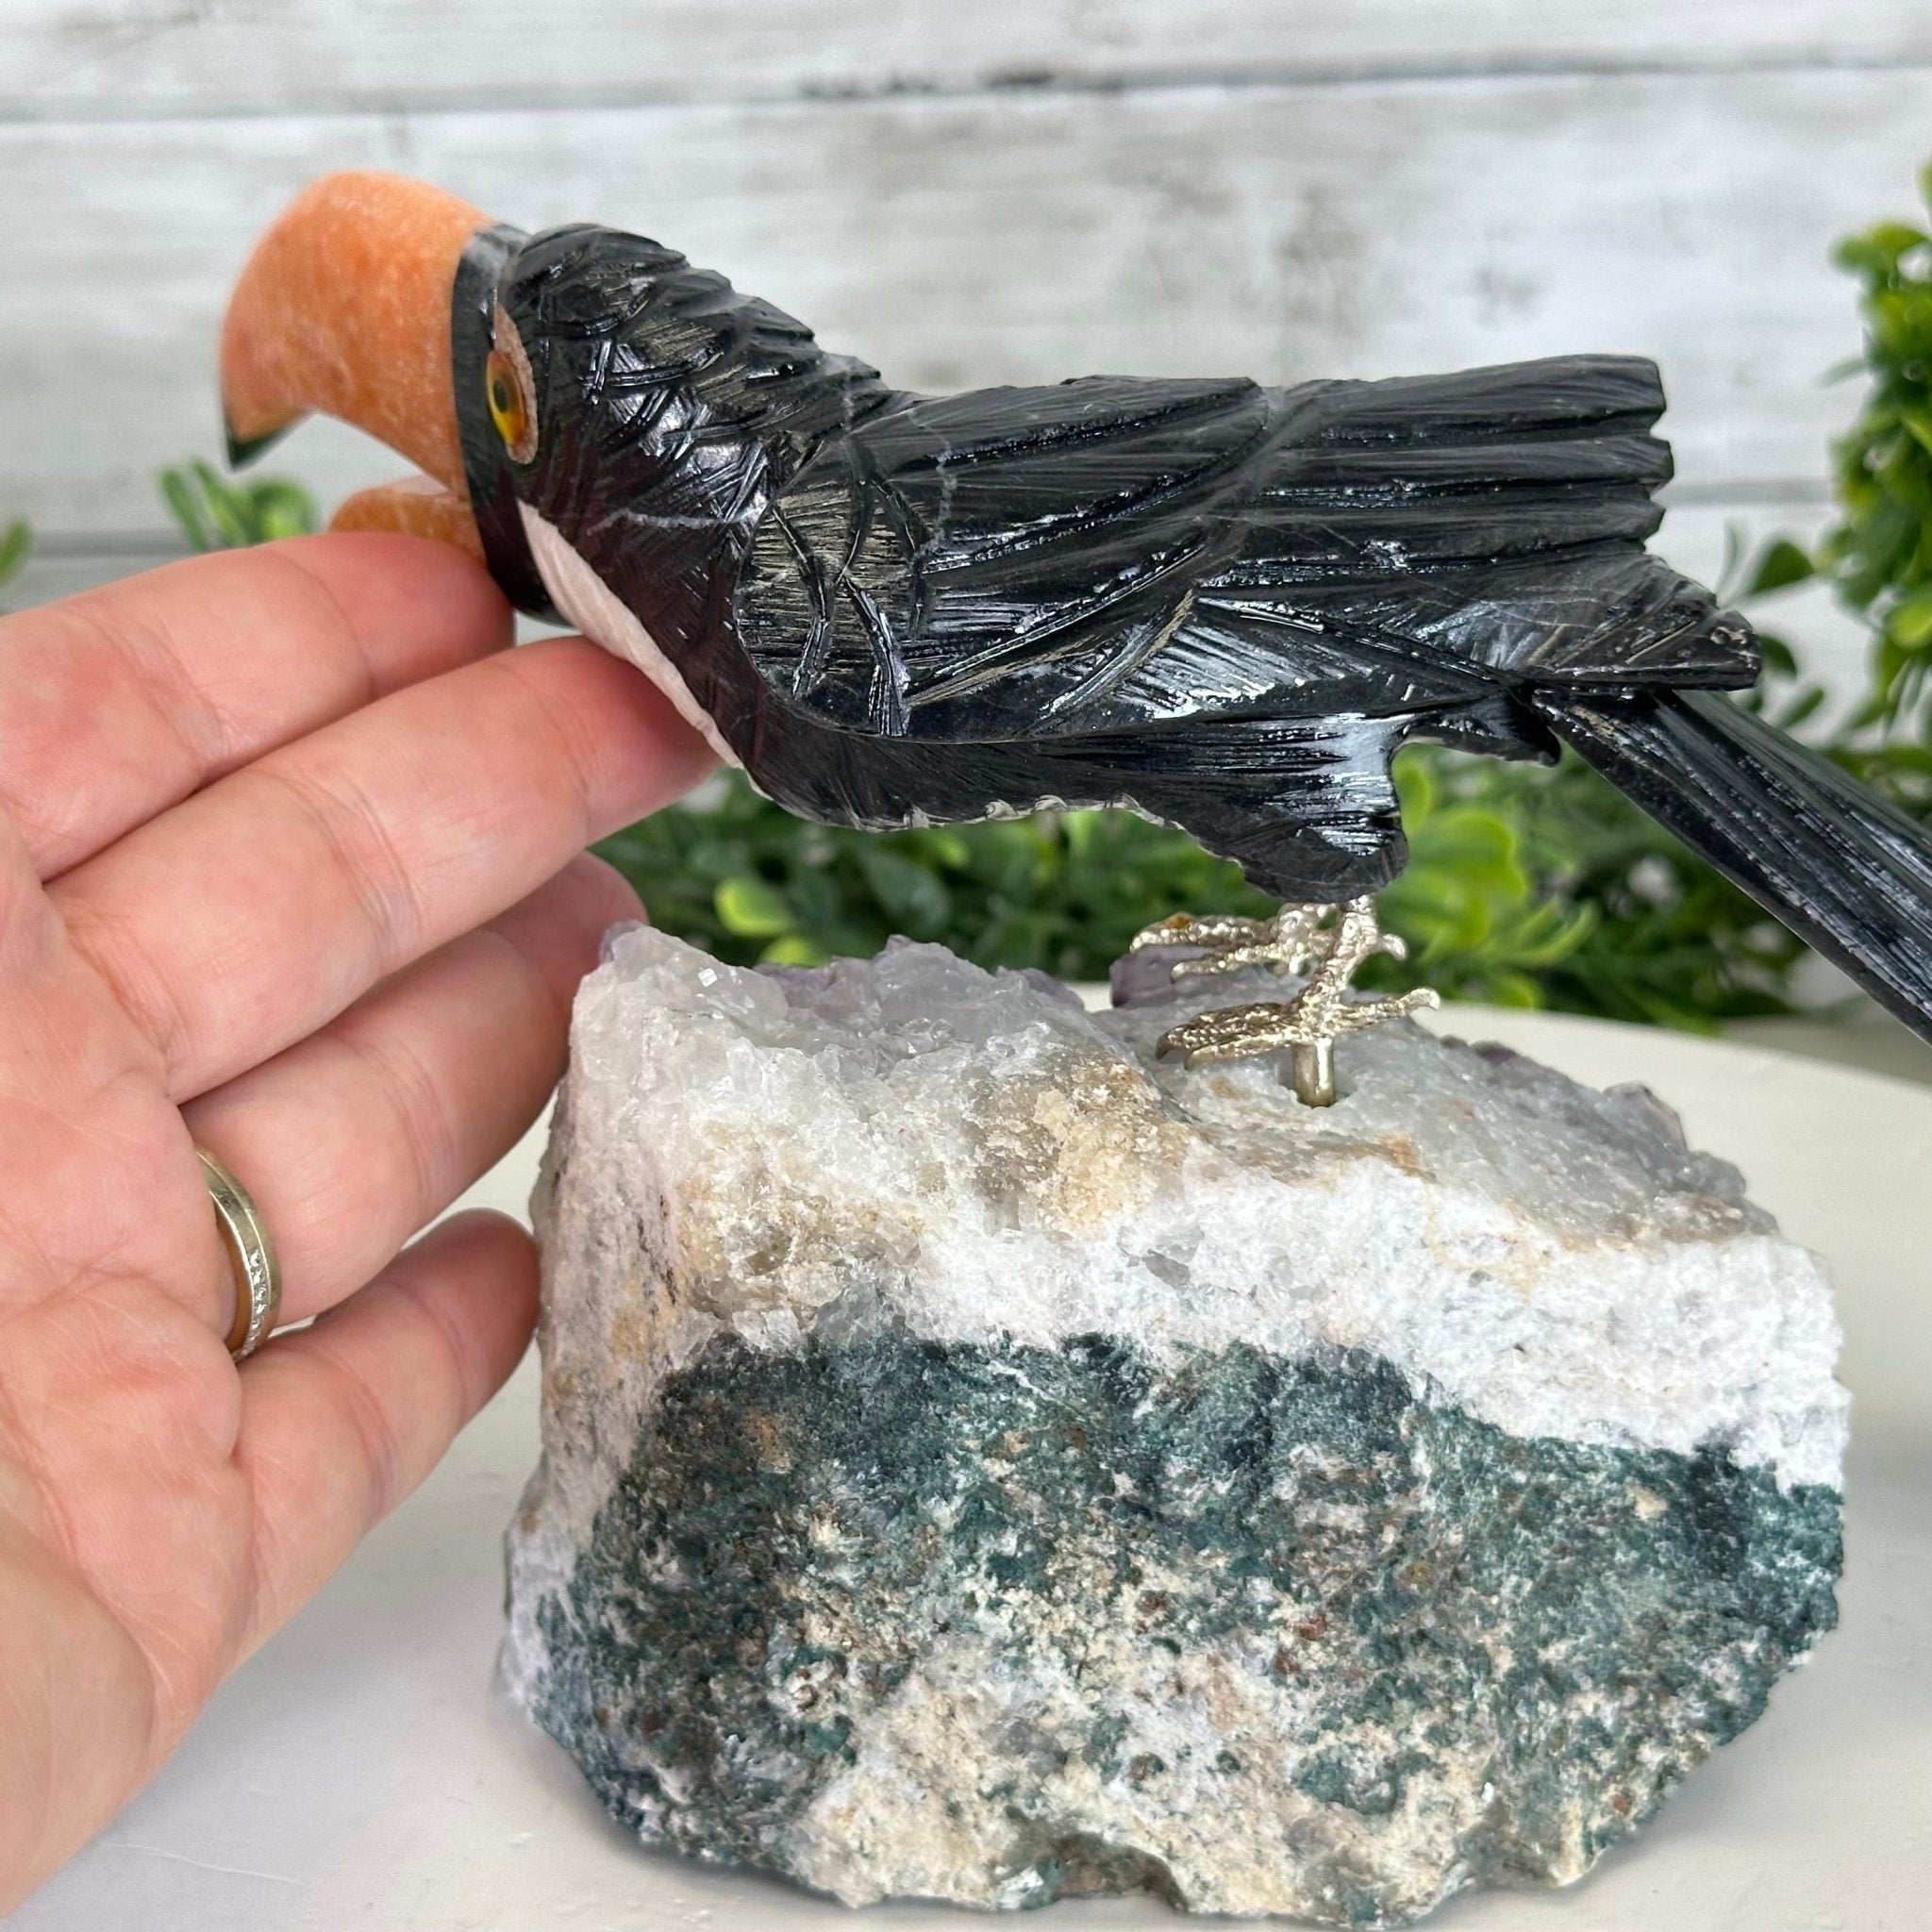 Hand-Carved Black Onyx Toucan Bird 12" Long on an Amethyst Base, #3004-BOTAM-052 - Brazil GemsBrazil GemsHand-Carved Black Onyx Toucan Bird 12" Long on an Amethyst Base, #3004-BOTAM-052Crystal Birds3004-BOTAM-052